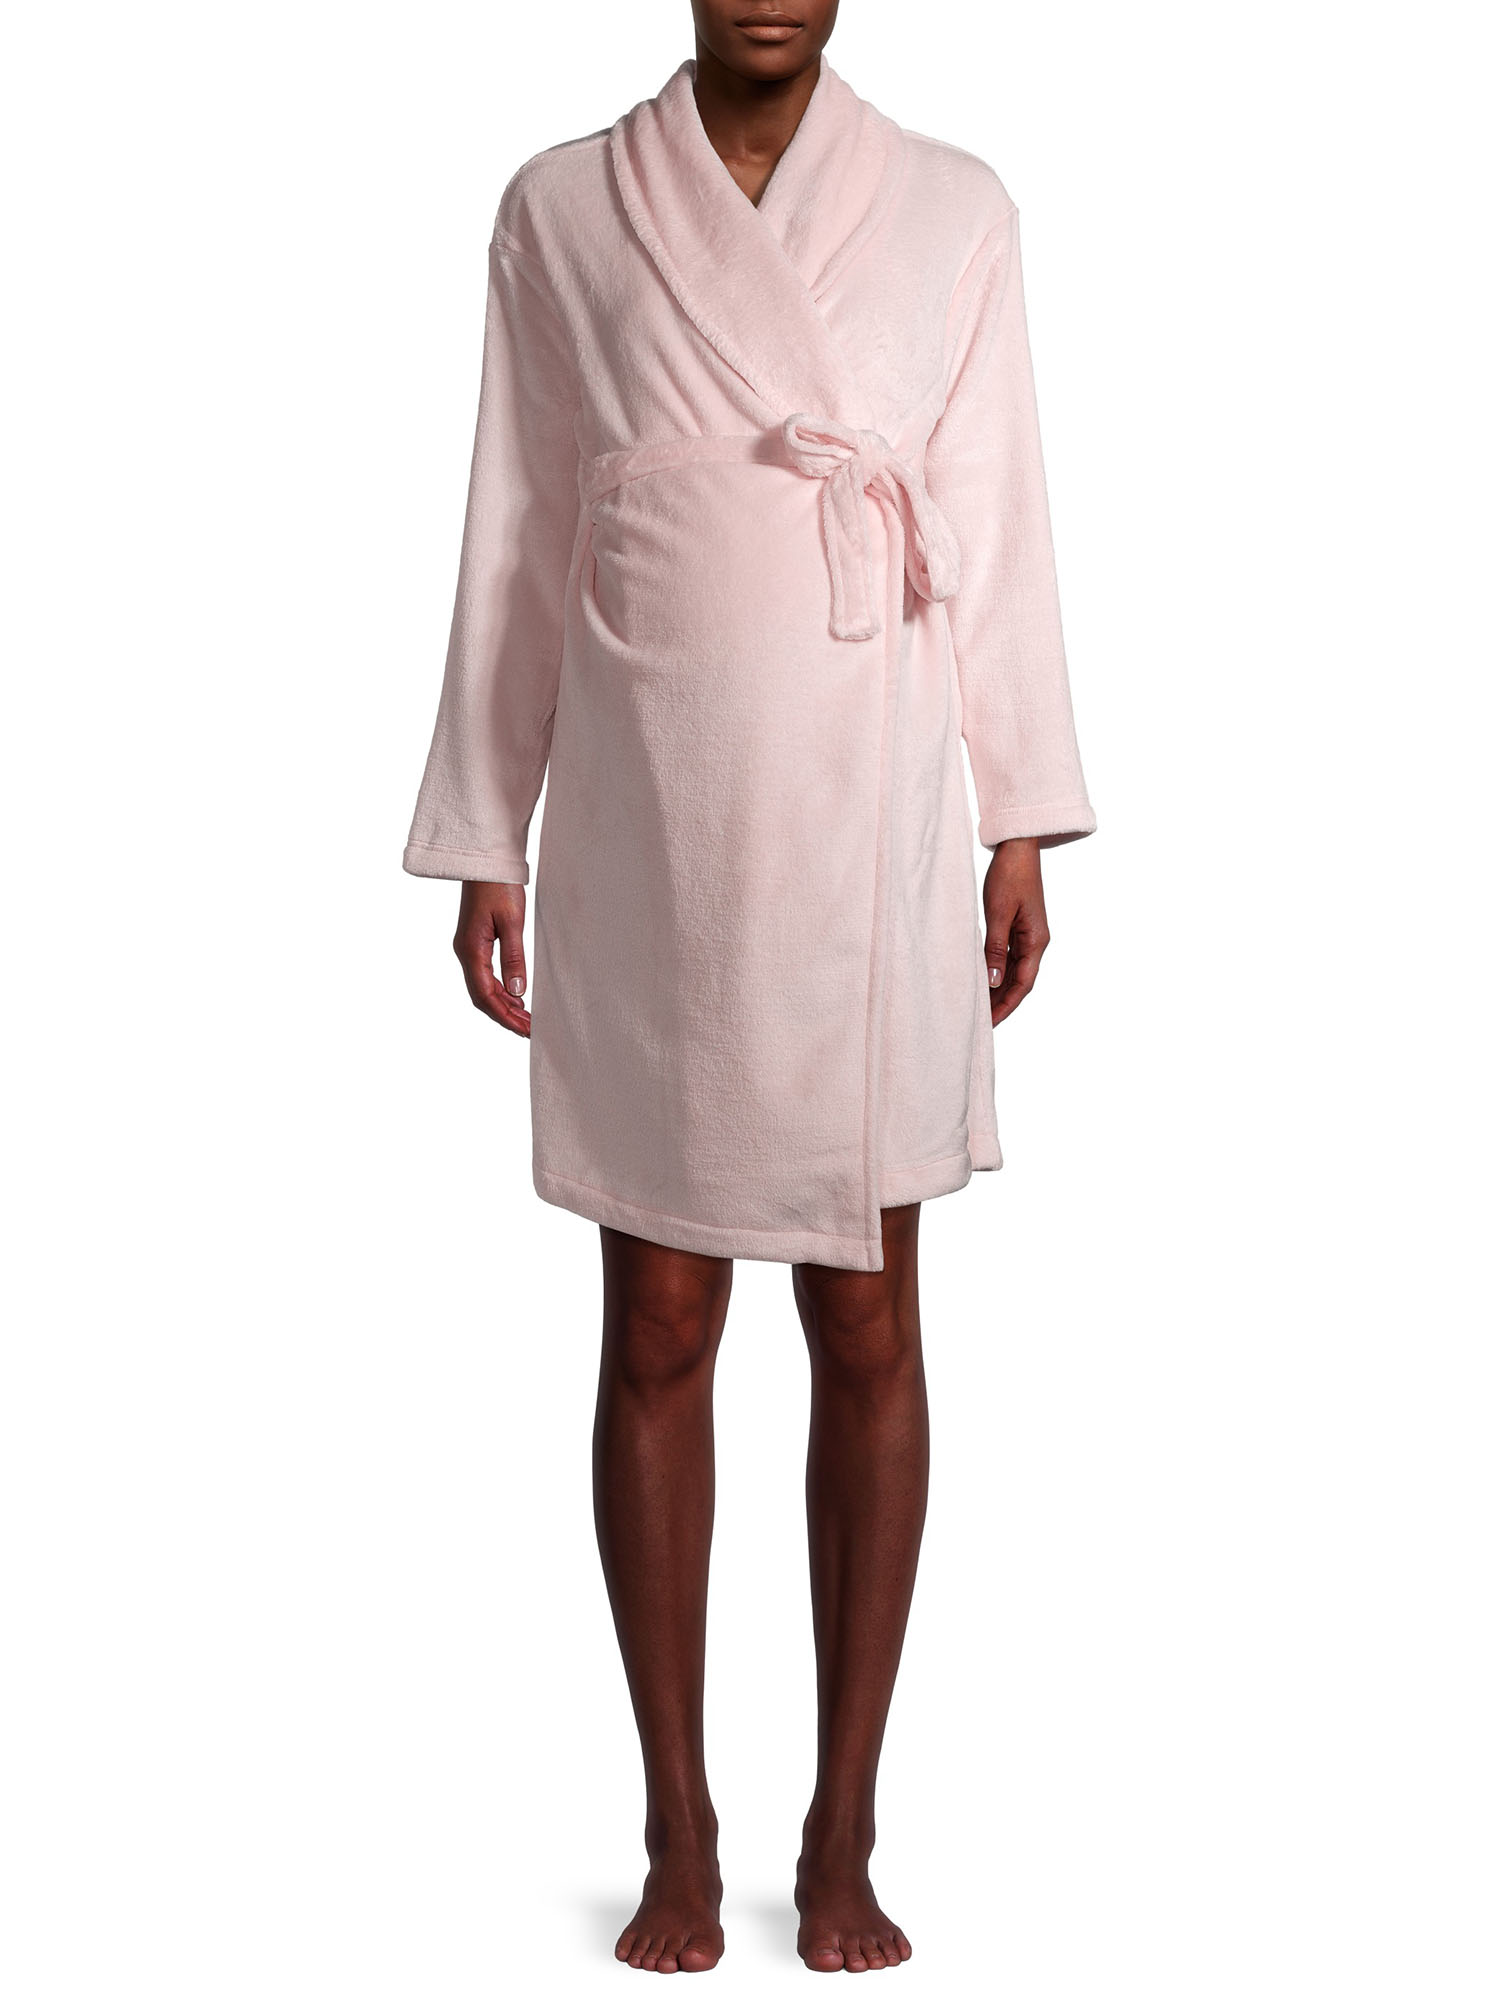 Maternity Secret Treasures Women's Plush Robe Set - Available in Plus Sizes - image 3 of 6